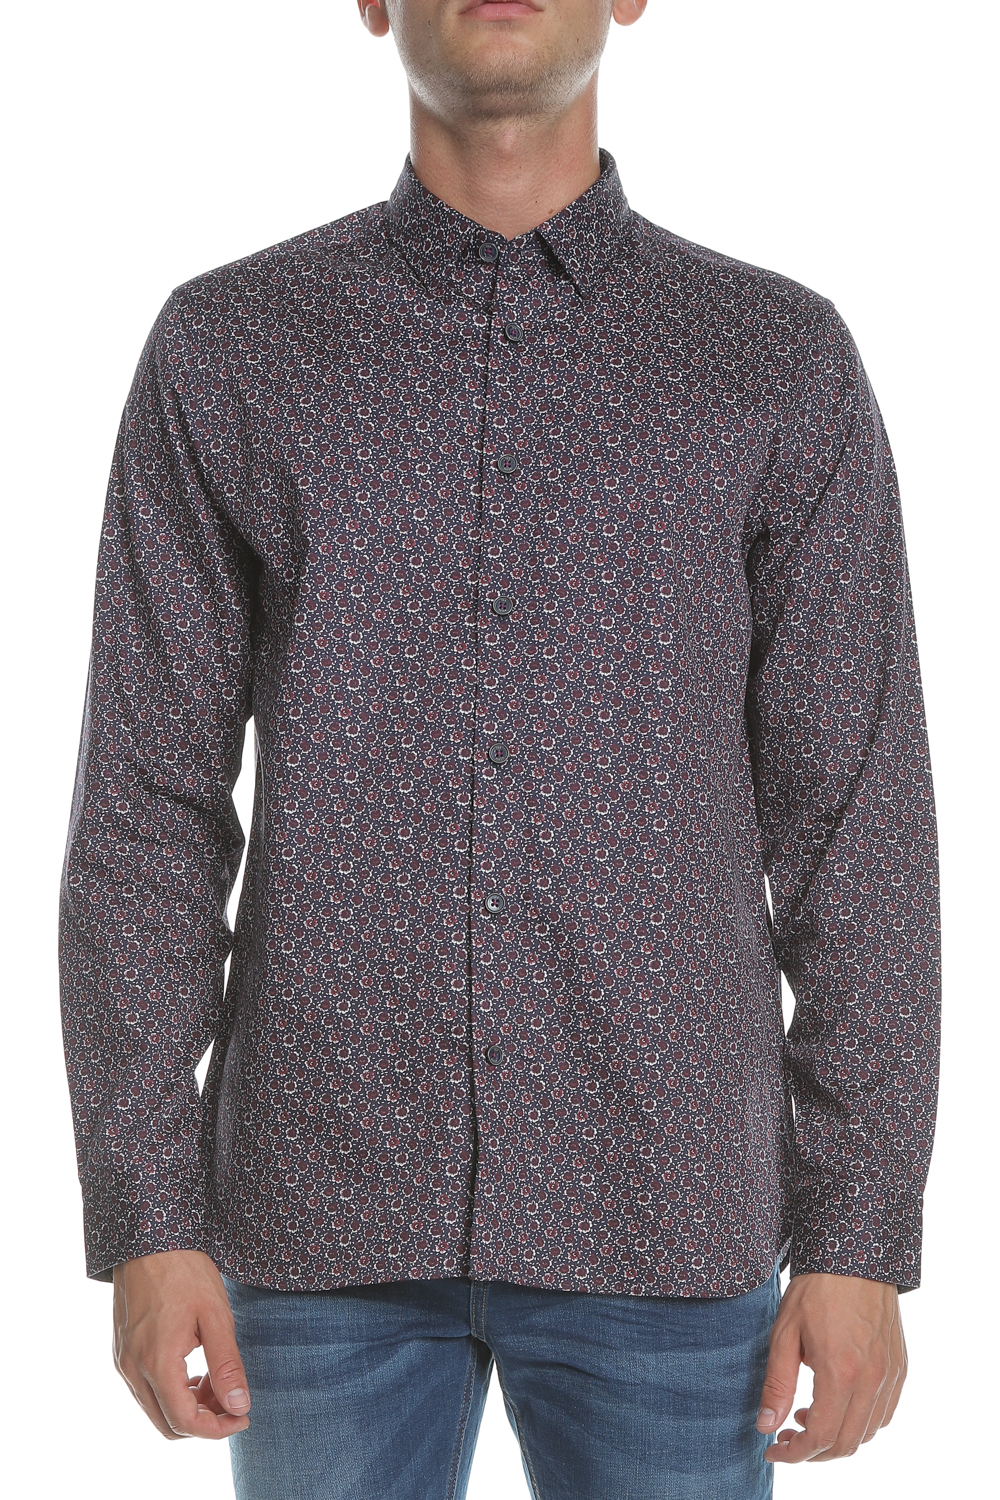 TED BAKER Ανδρικό μακρυμάνικο πουκάμισο THORNTO LS μοβ με φλοράλ μοτίβο